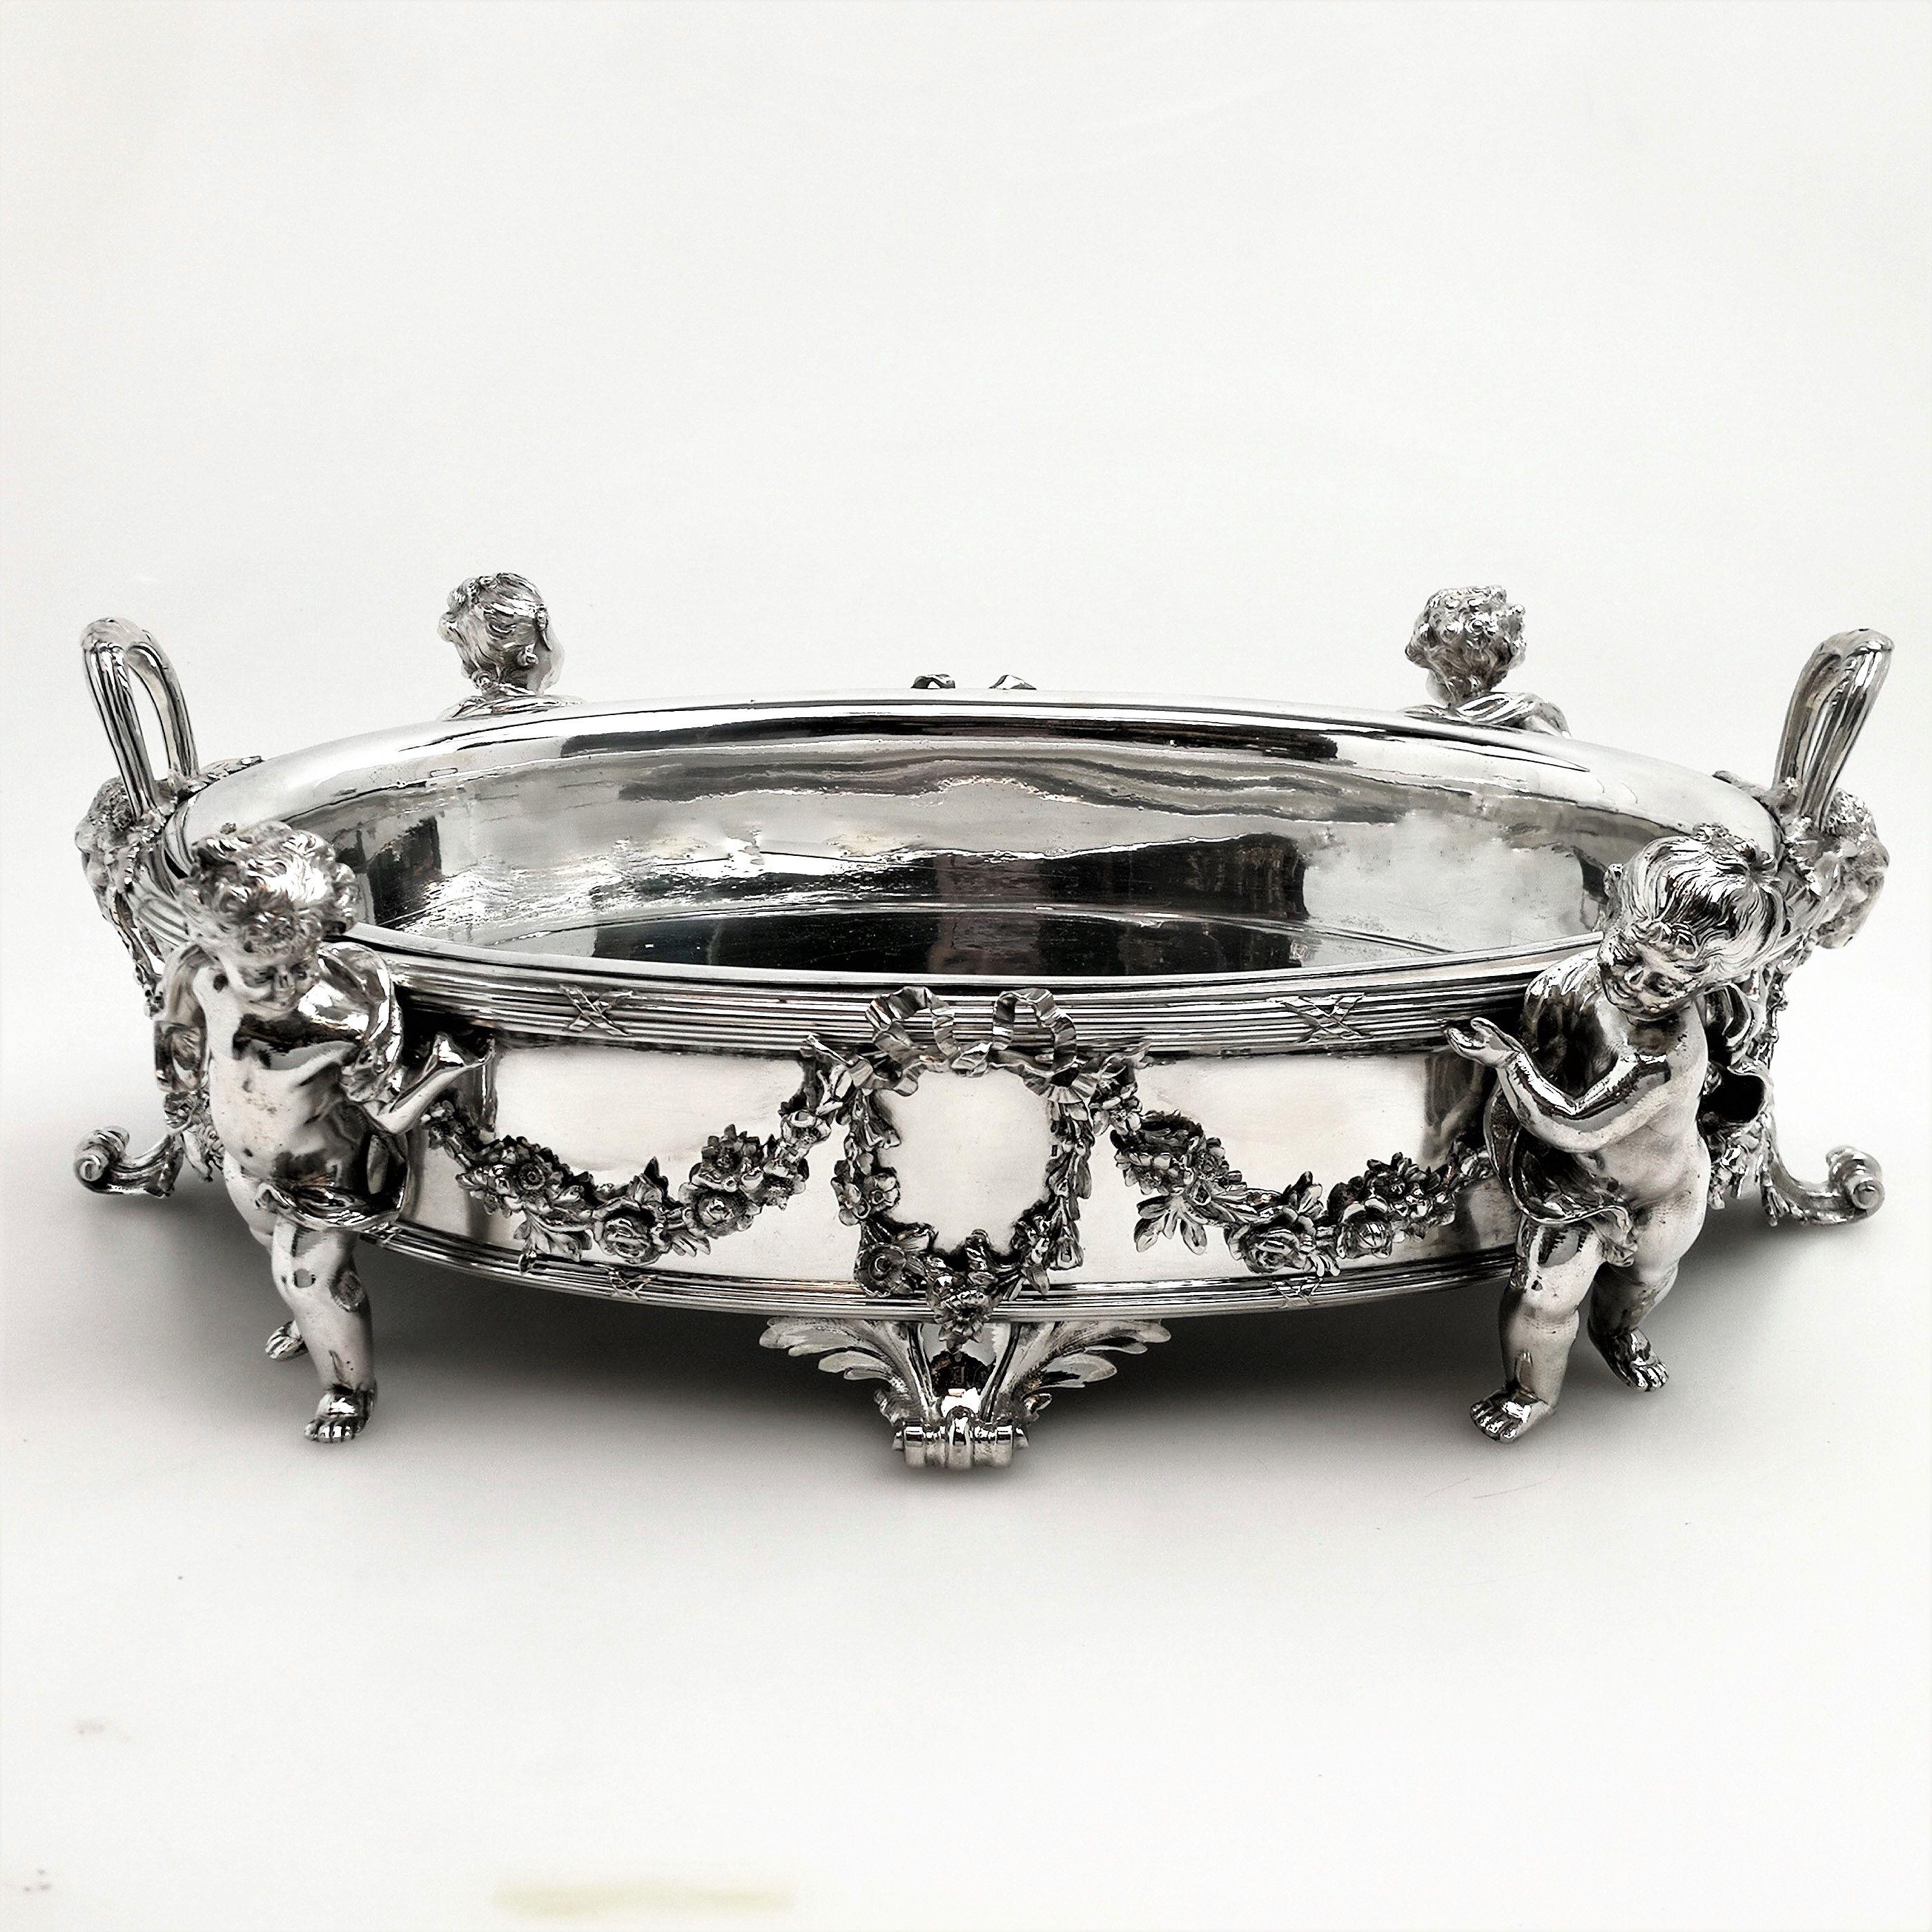 Early 20th Century Antique Austrian Silver Centrepiece Jardinière Bowl On Plateau c 1900